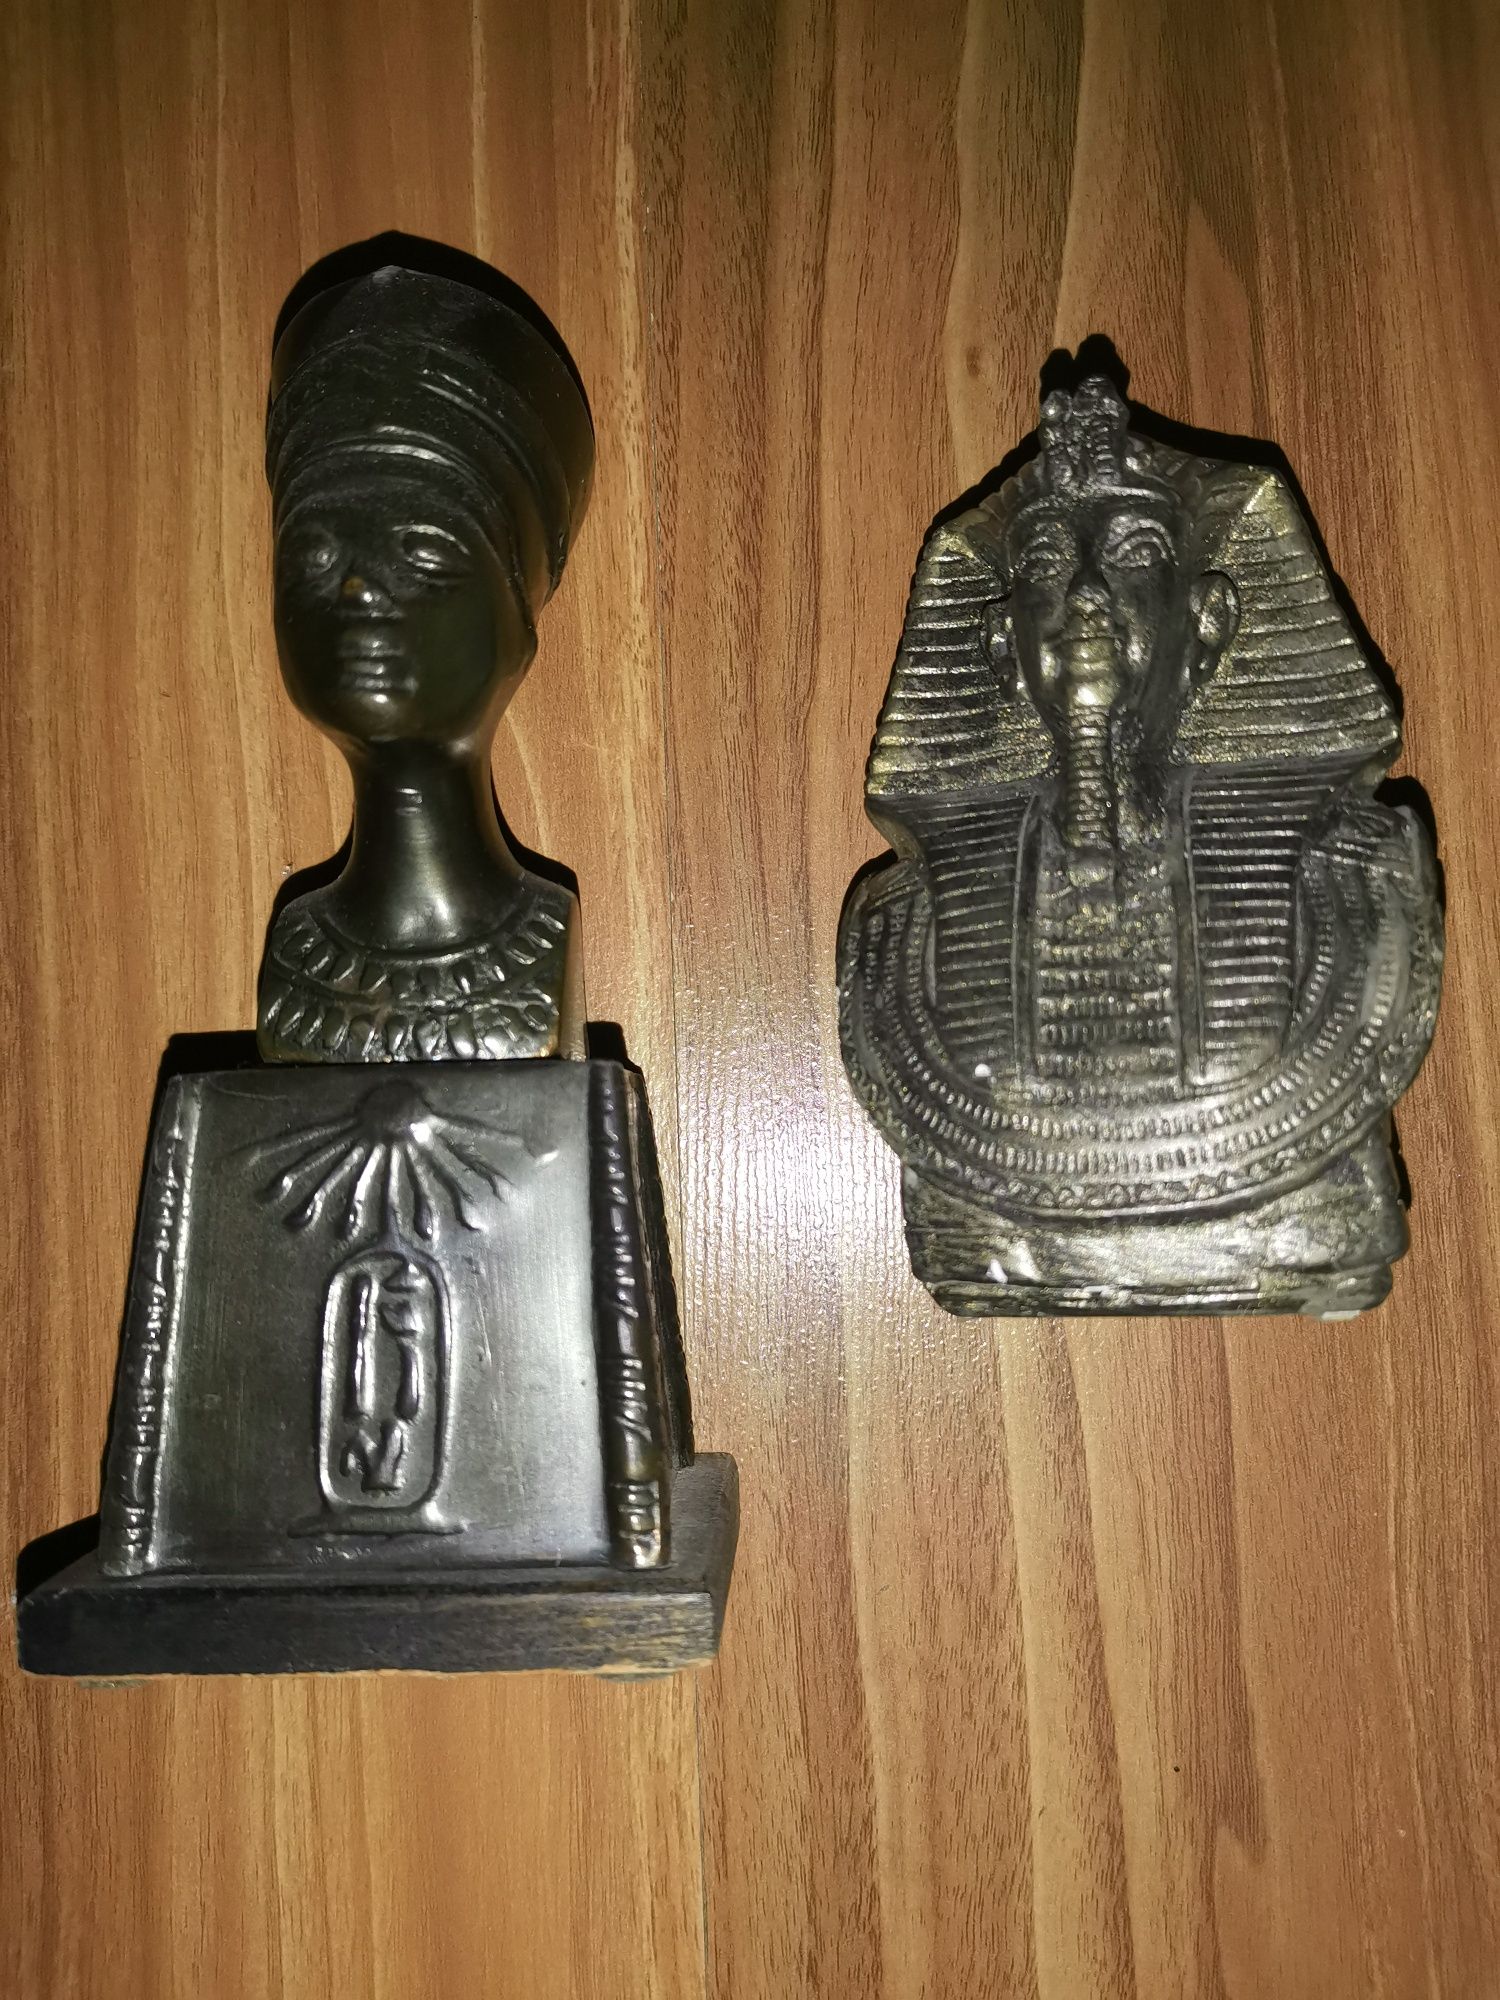 Statuete (bust) NefertitiI & Tutankhamon